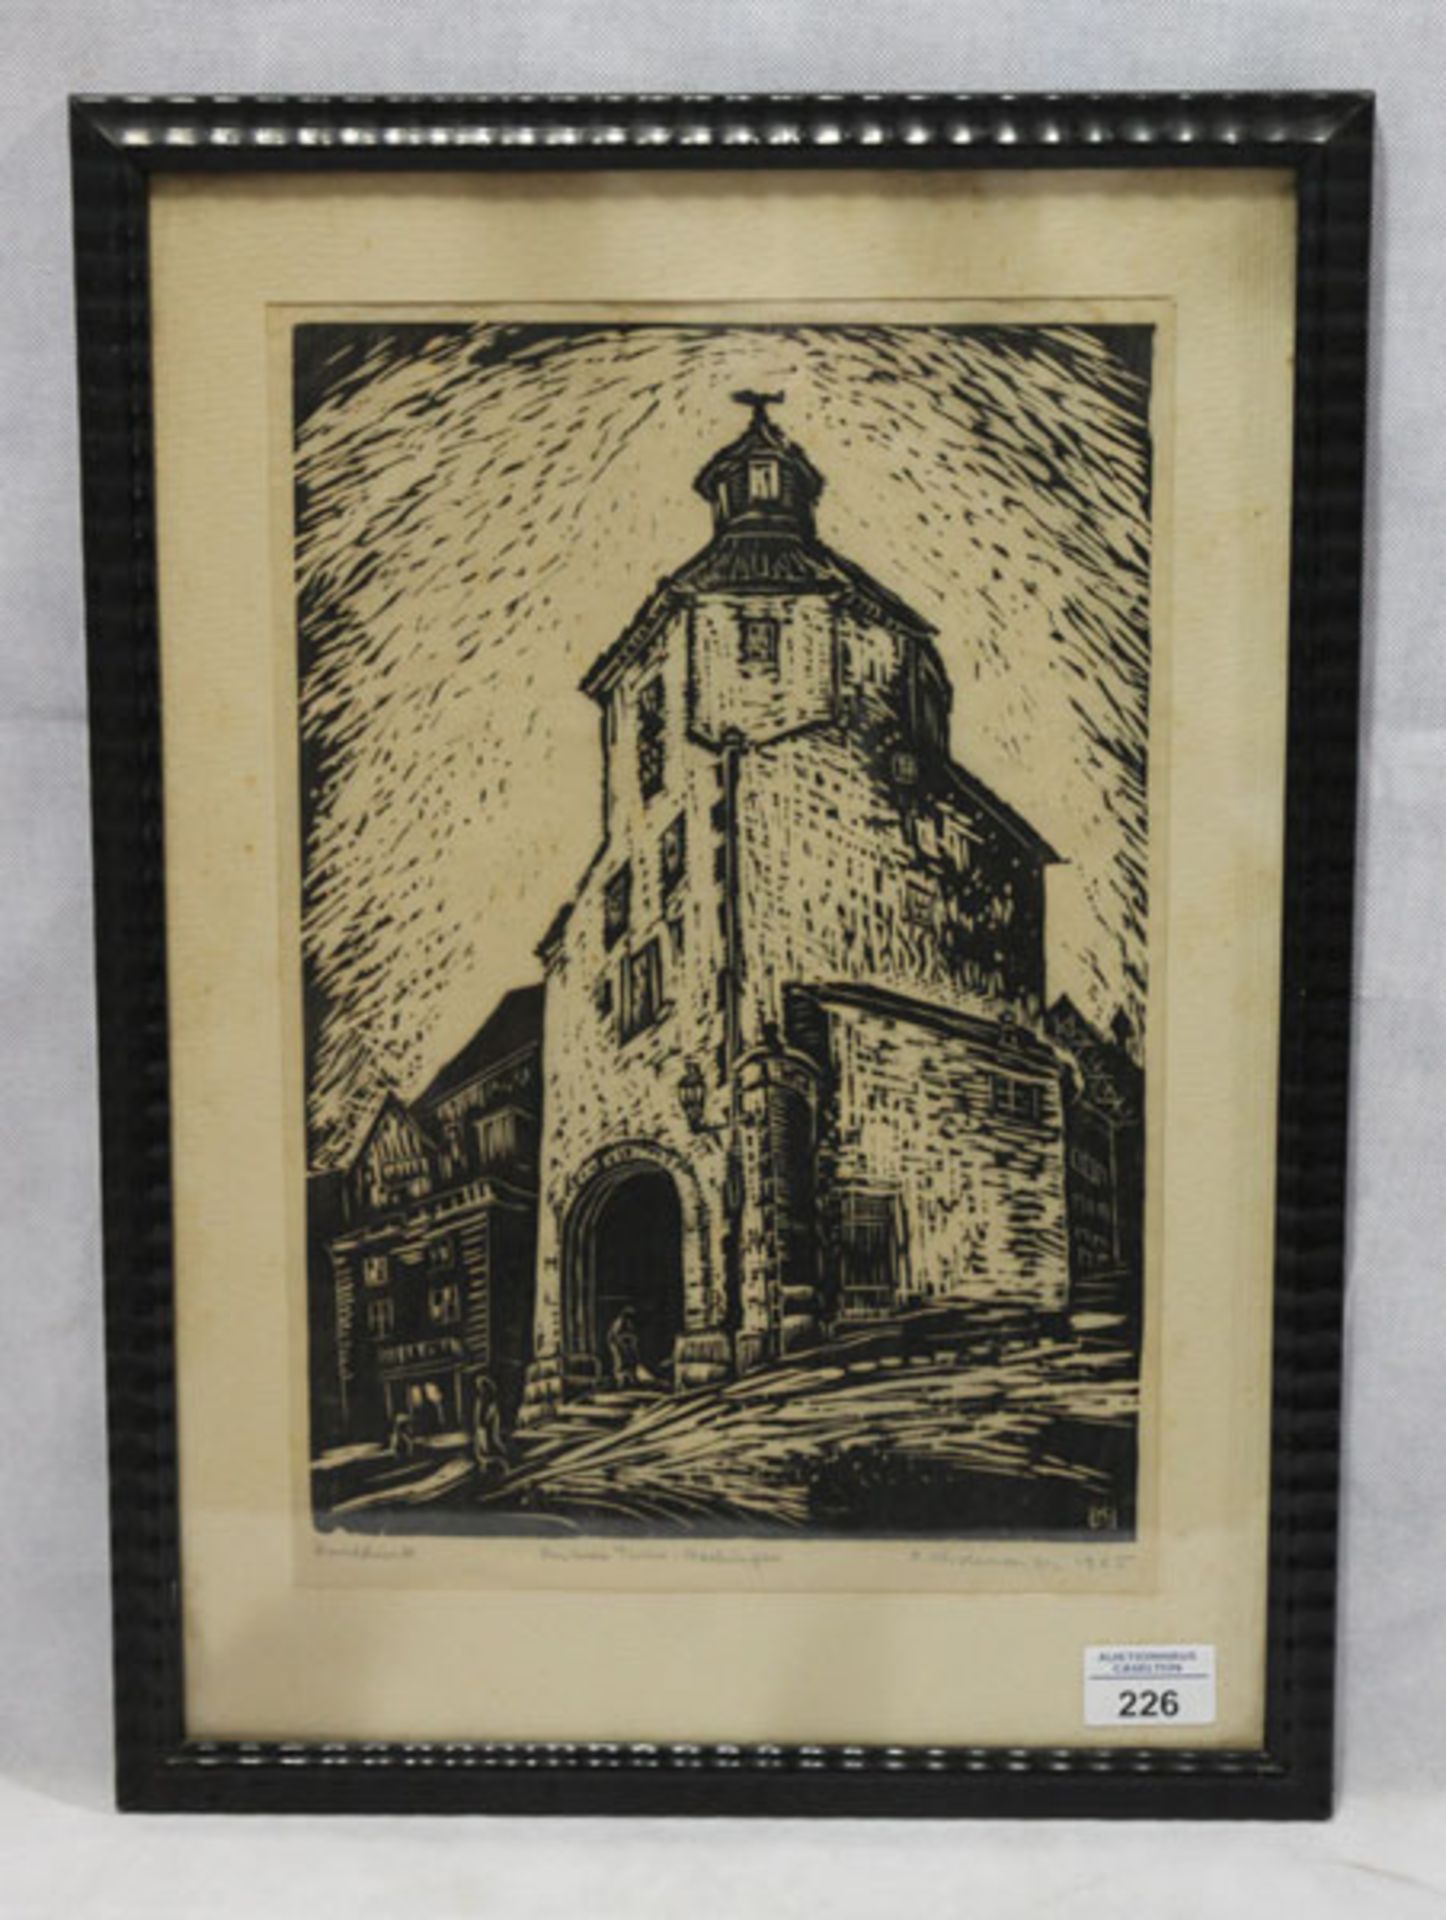 Handdruck 'Unterer Turm-Hechingen', signiert K. Widmaier, datiert 1925, mit Passepartout unter